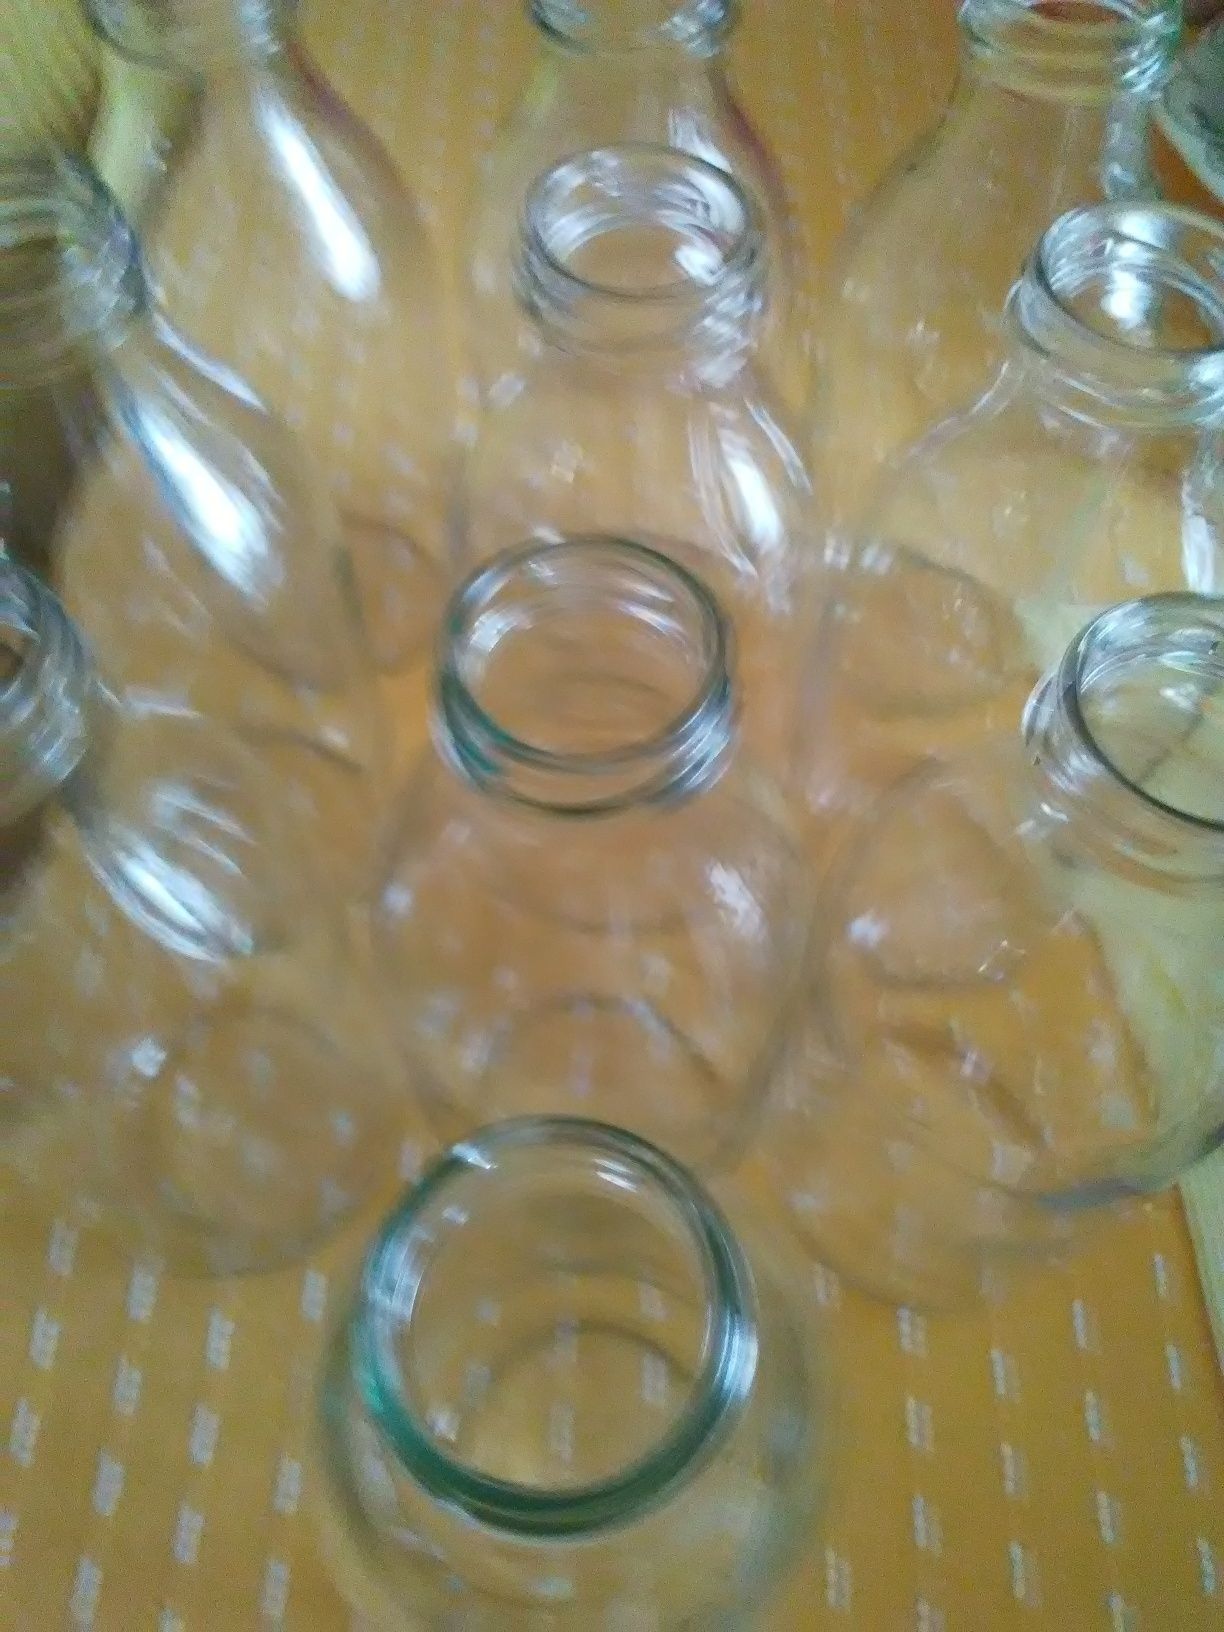 20 garrafas (frascos) de vidro